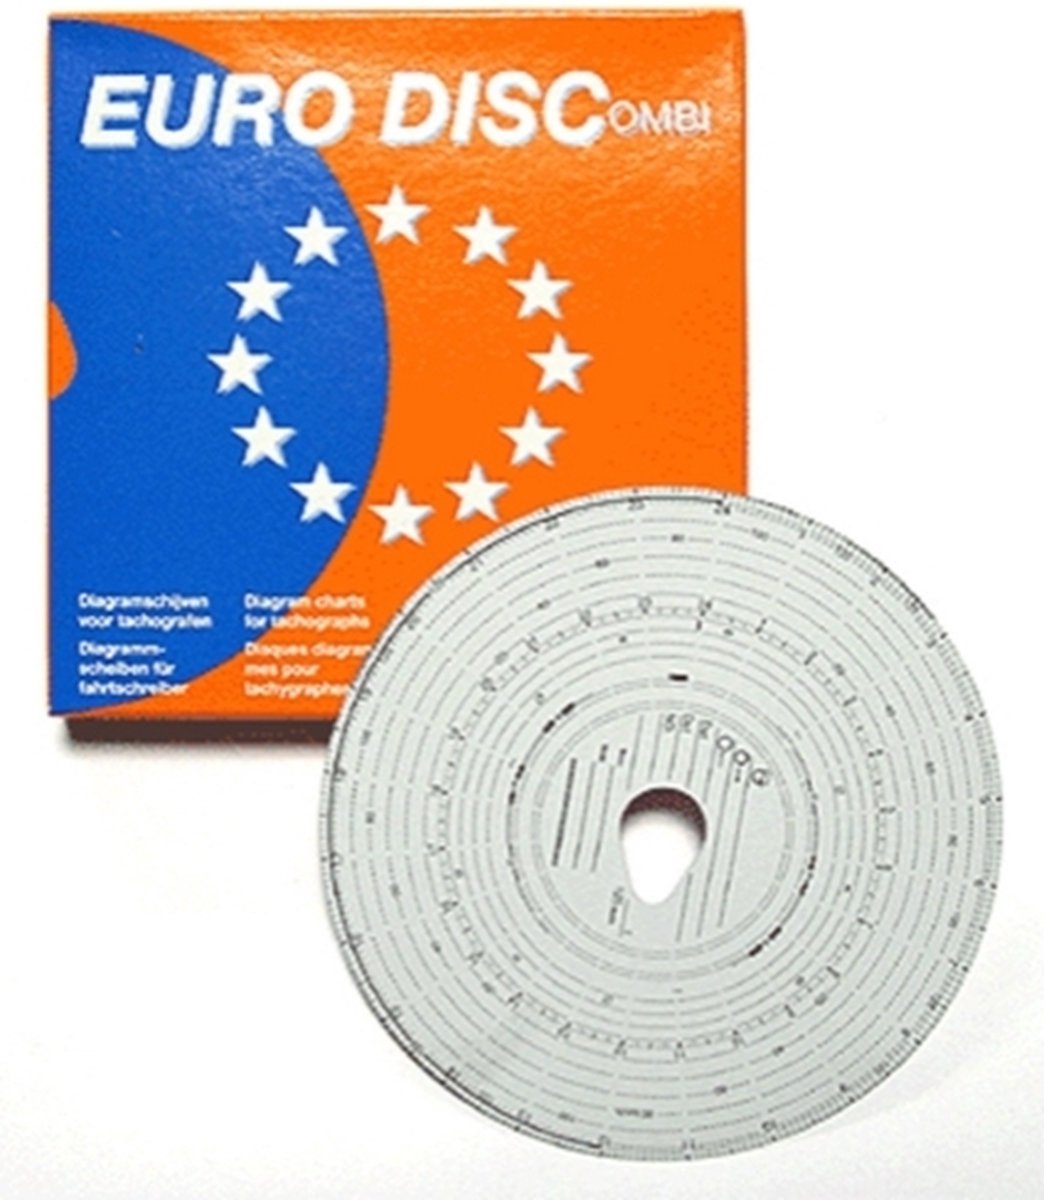 Euro Disc - EURO DISC 180 KM COMBI